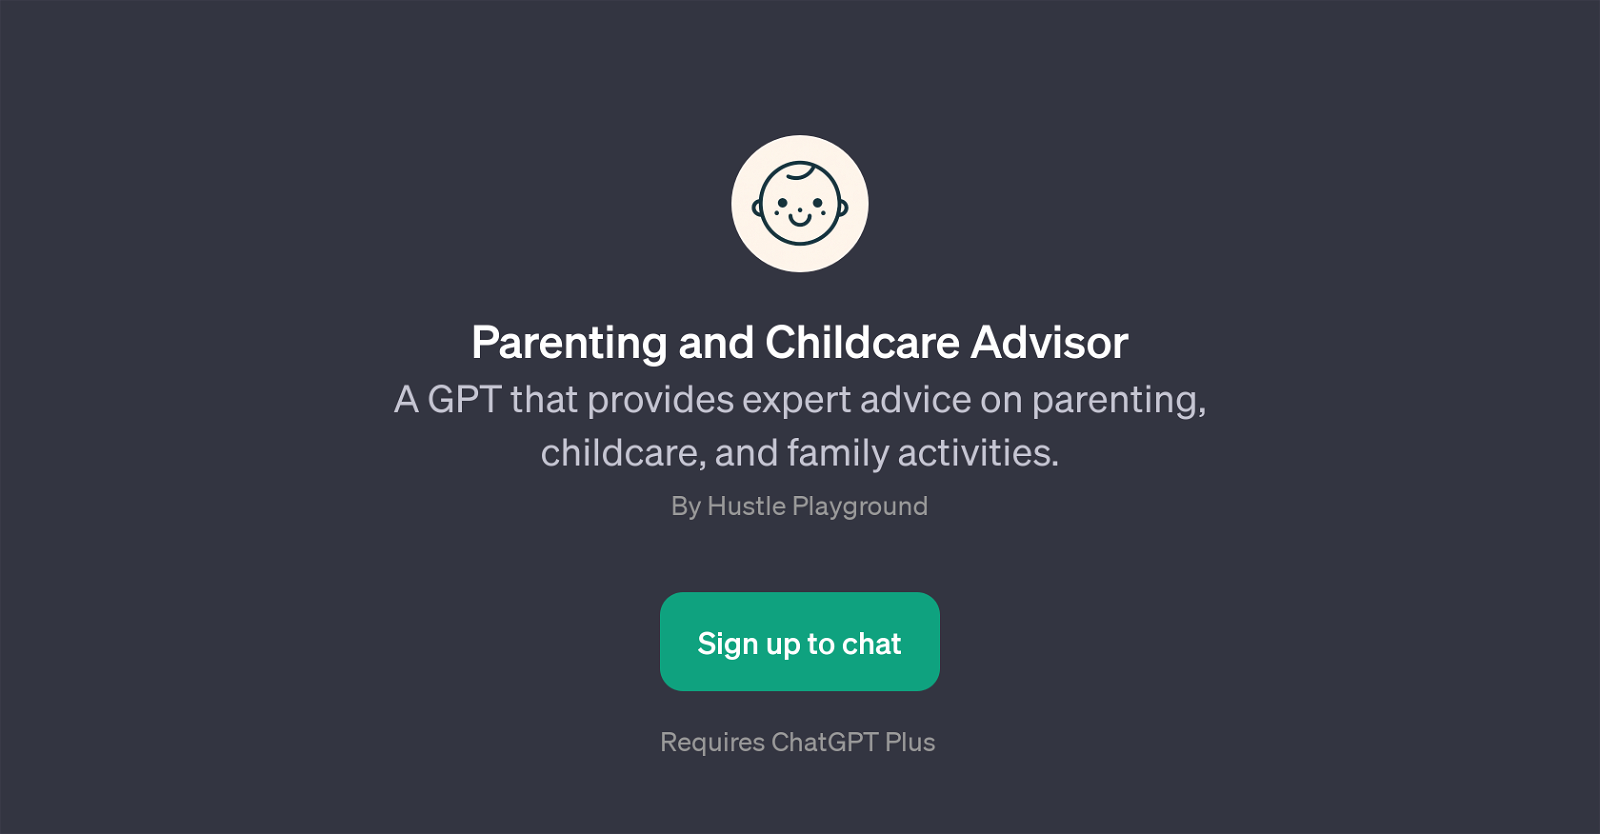 Parenting and Childcare Advisor website